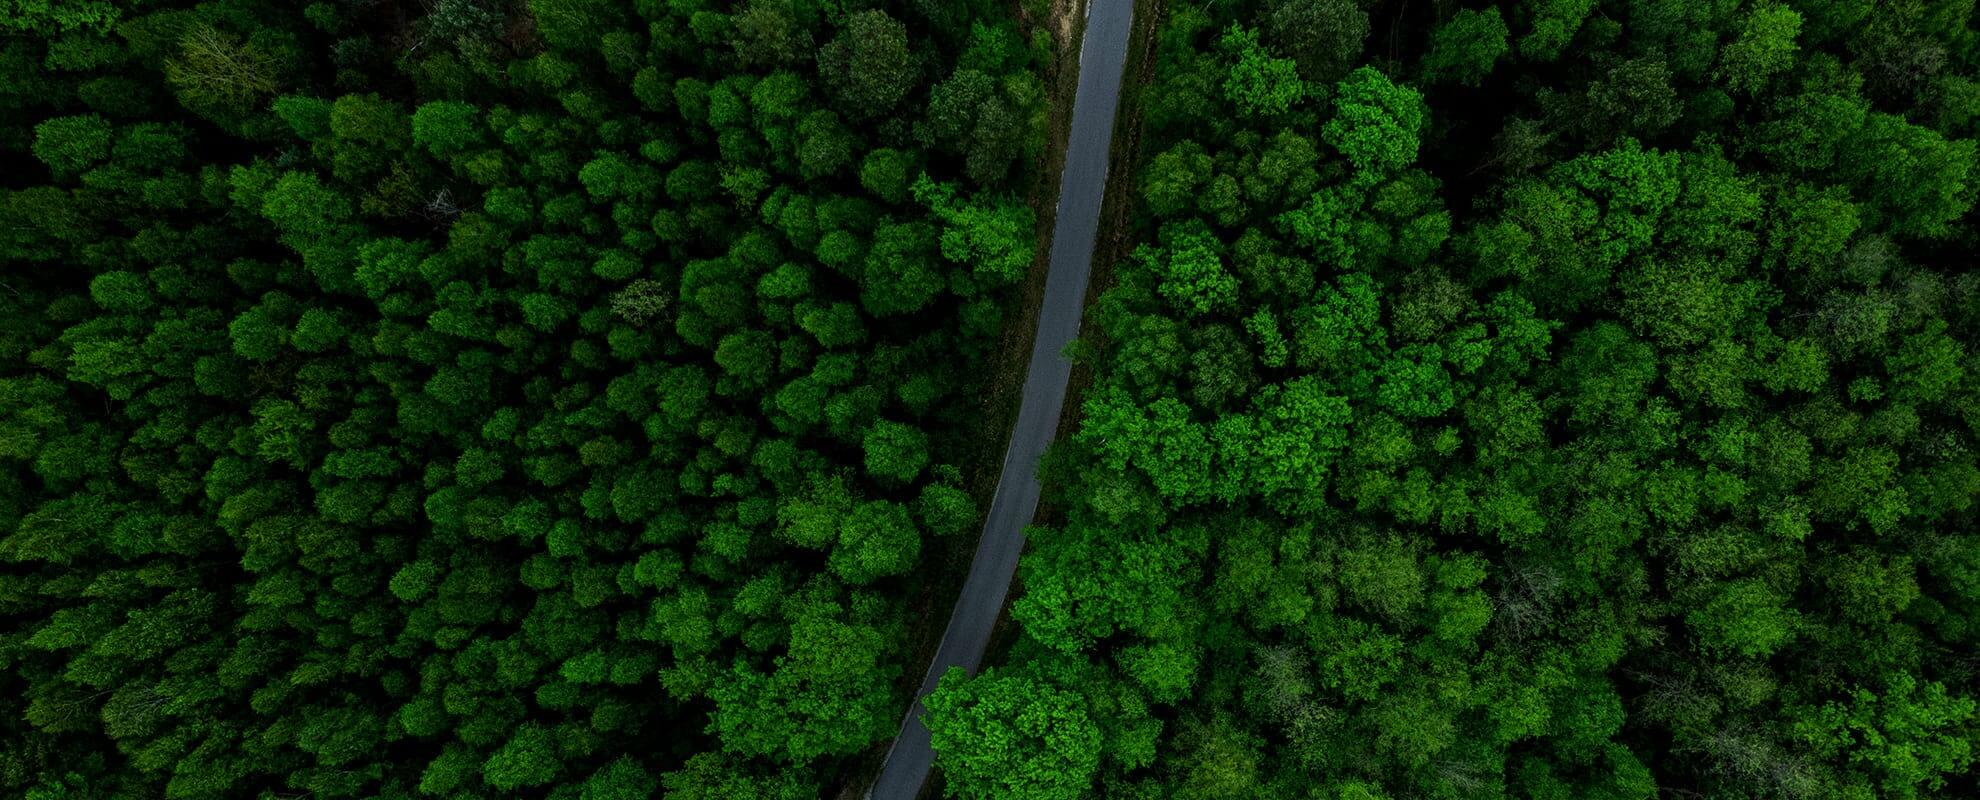 tesilab strada forestale